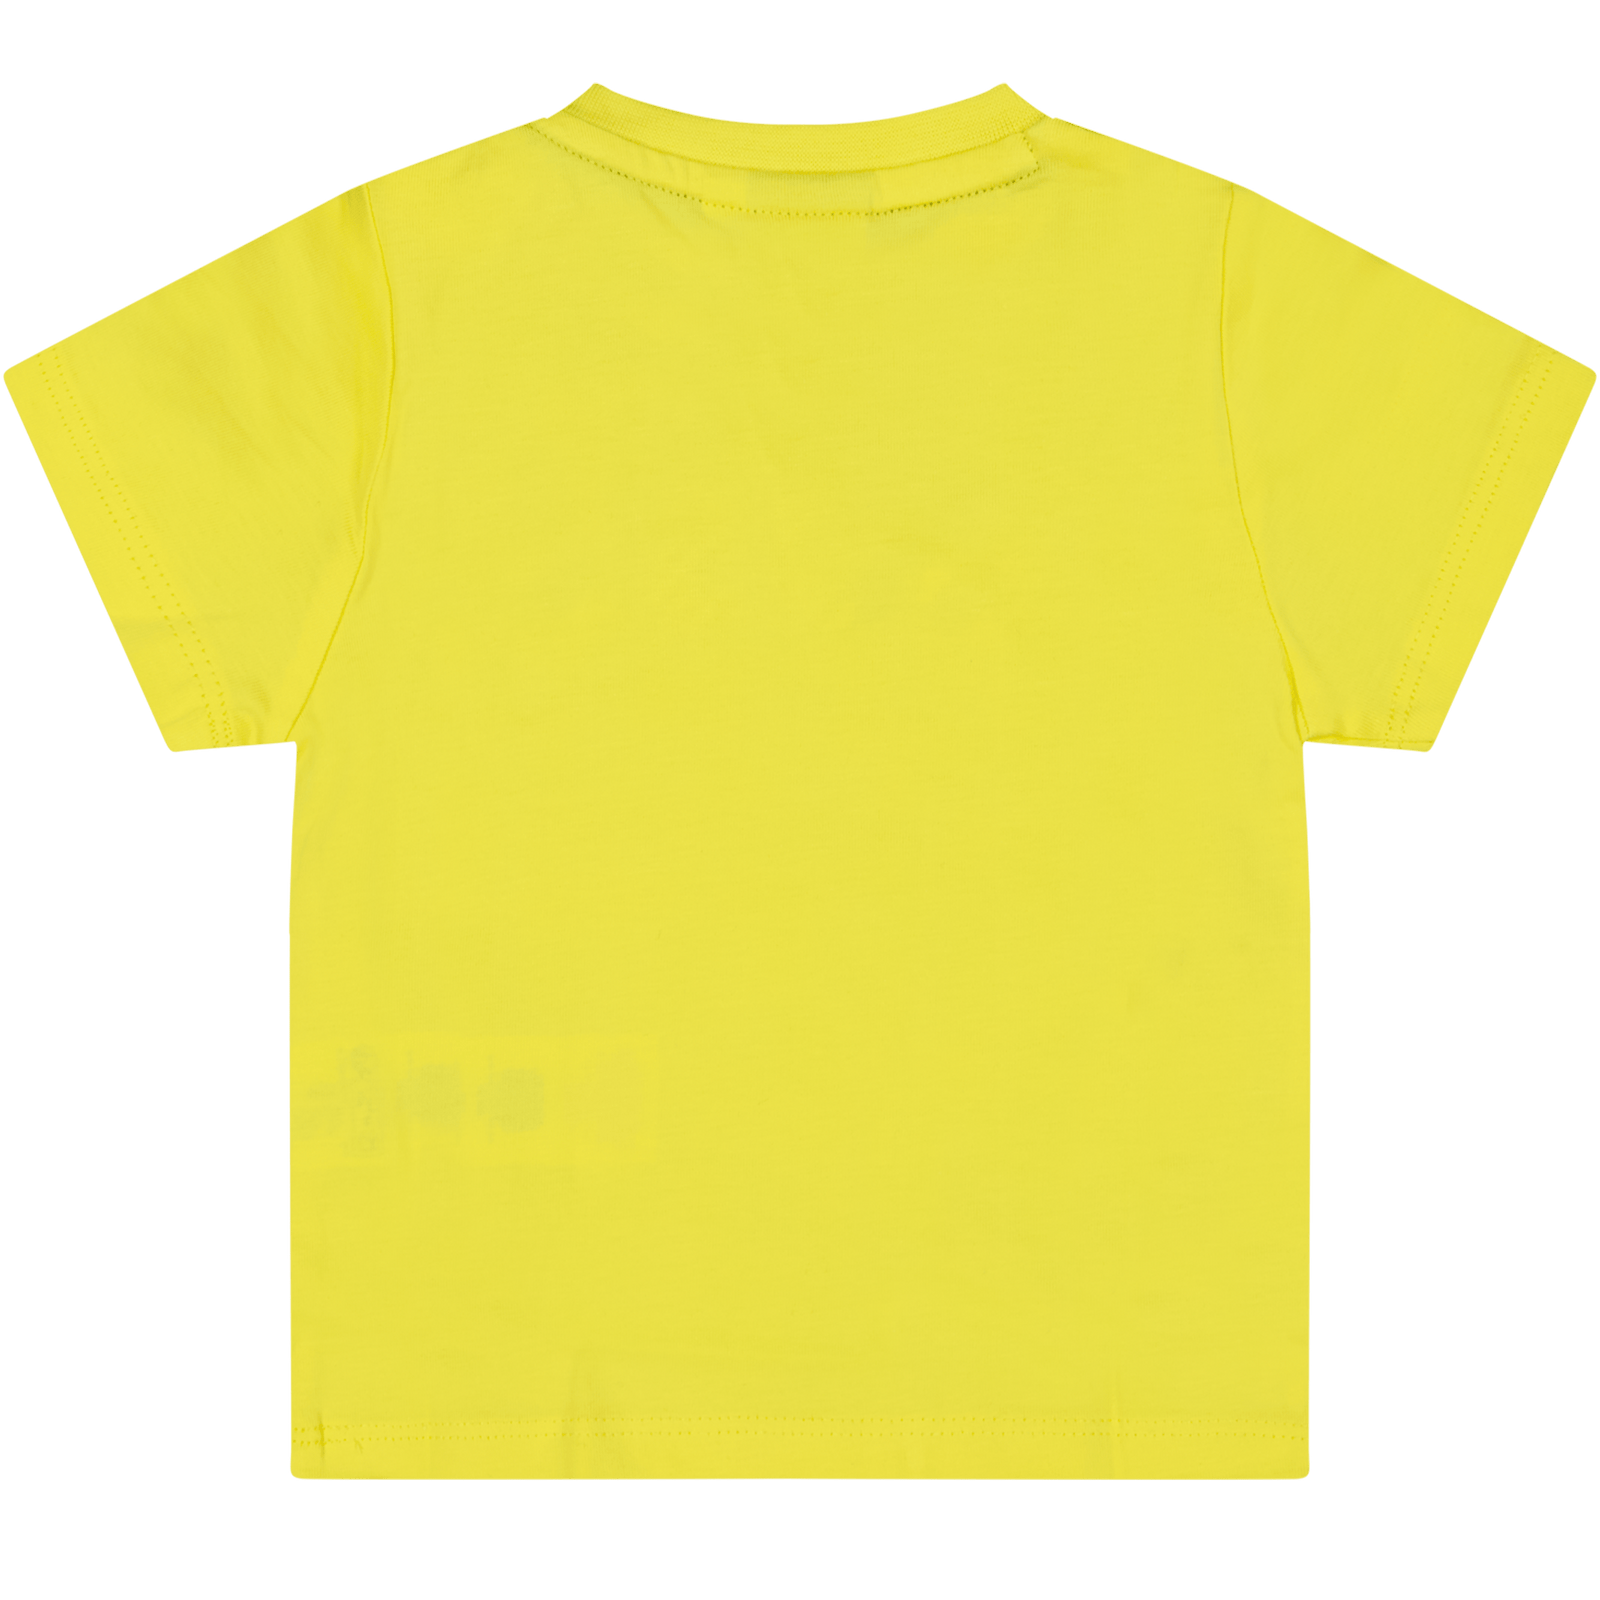 Boss Baby Jongens T-Shirt Geel 6 mnd